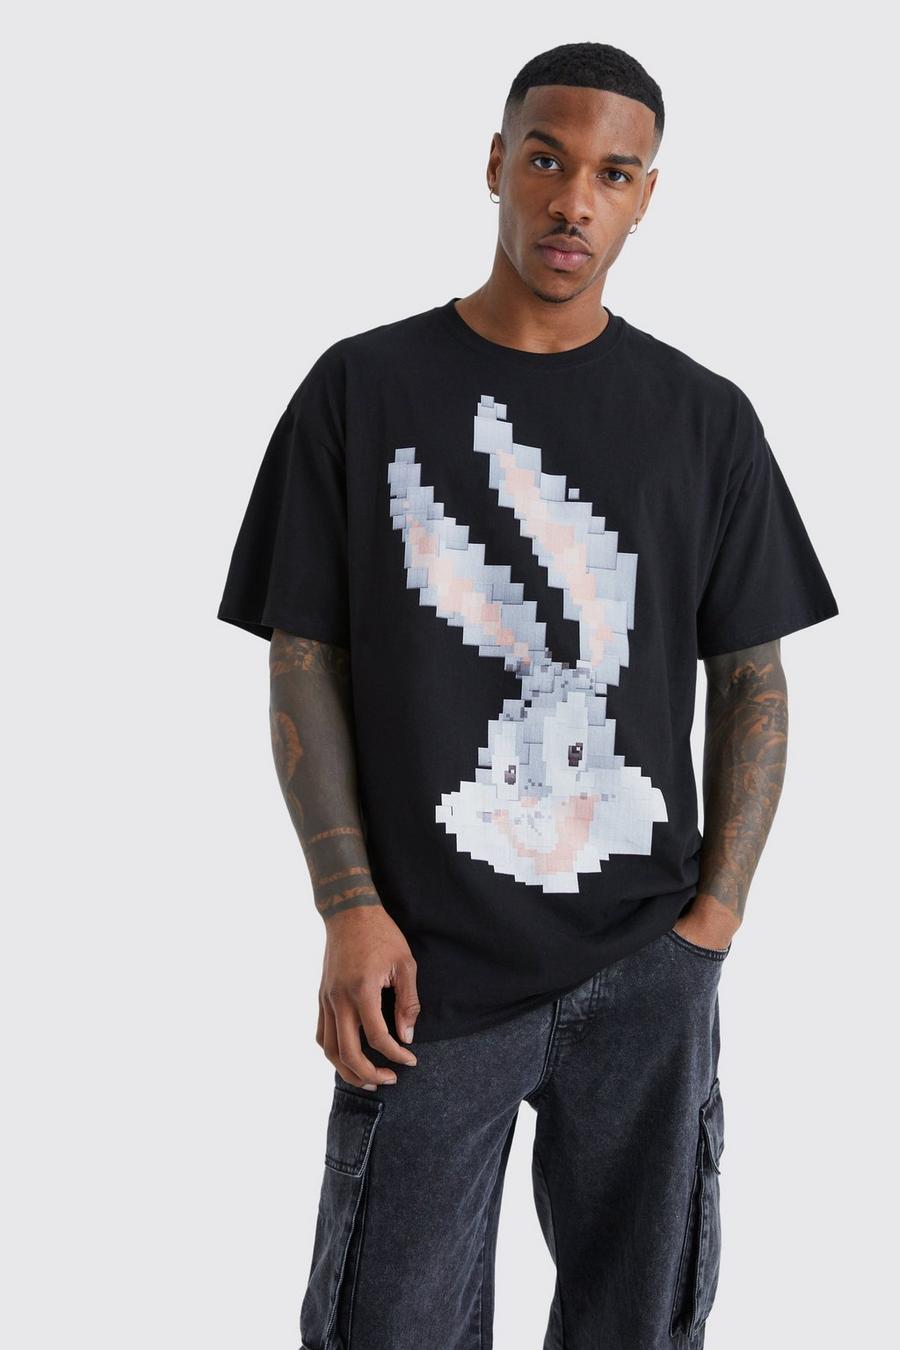 Black negro Oversized Pixel Bugs Bunny License T-shirt